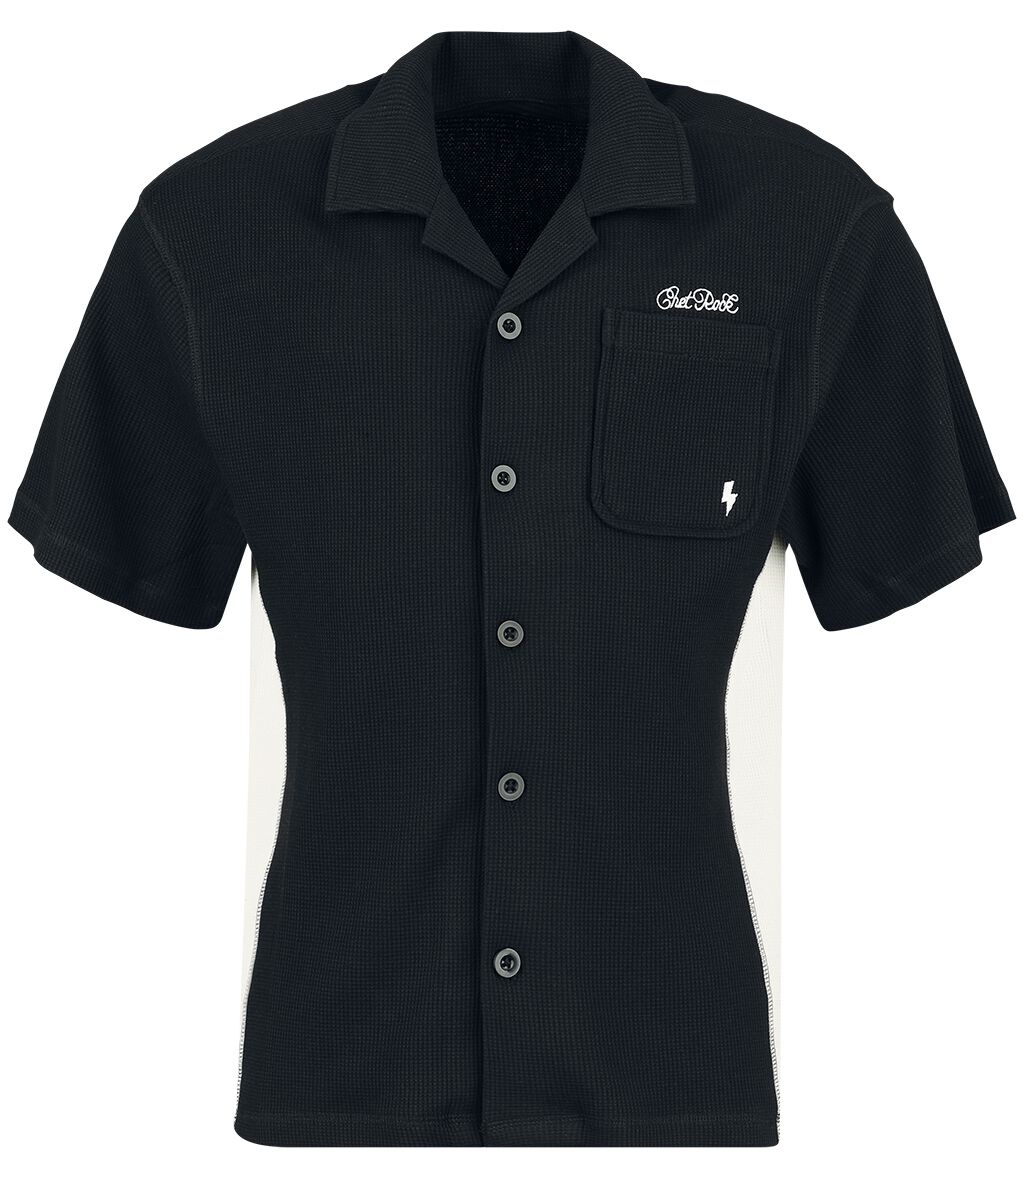 Image of Camicia Maniche Corte Rockabilly di Chet Rock - Sienna Shirt - S a XXL - Uomo - nero/bianco